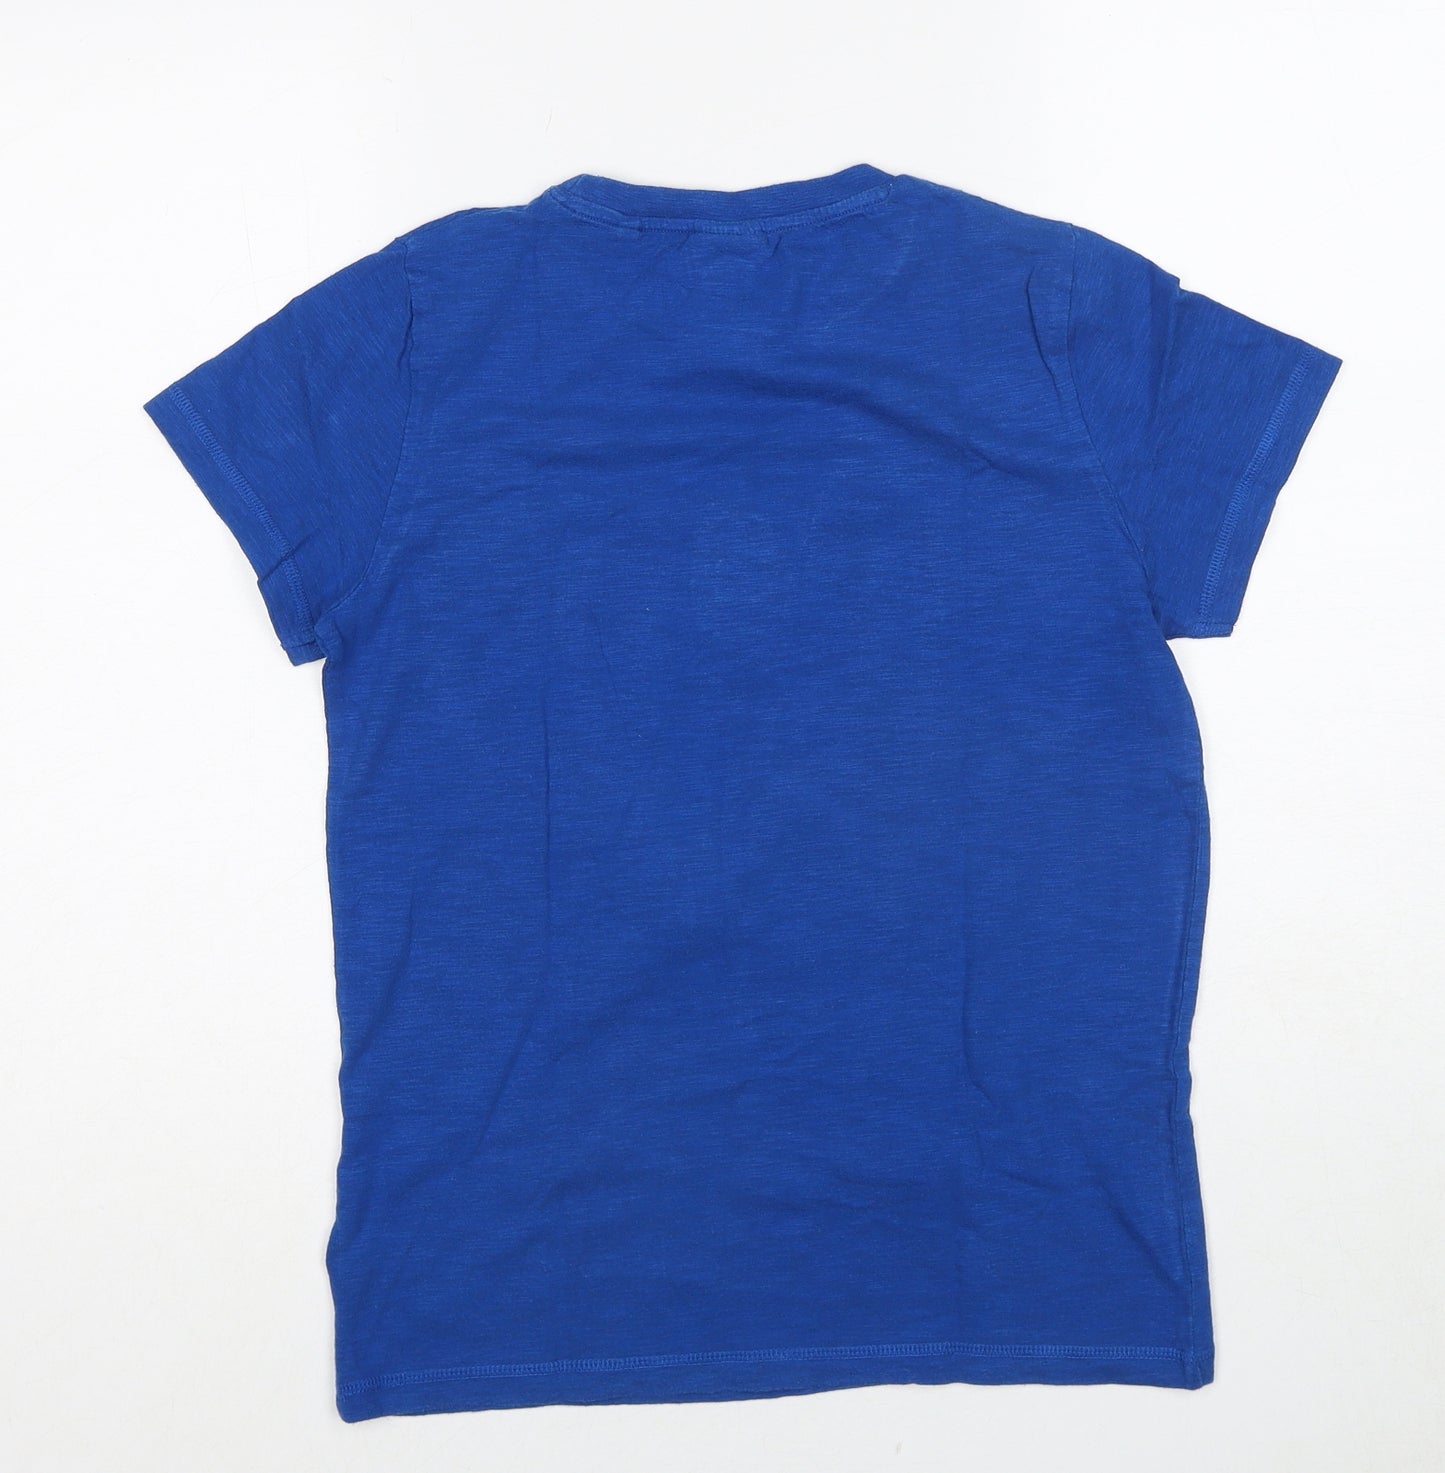 Marvel Boys Blue Cotton Basic T-Shirt Size 11 Years Round Neck Pullover - Avengers